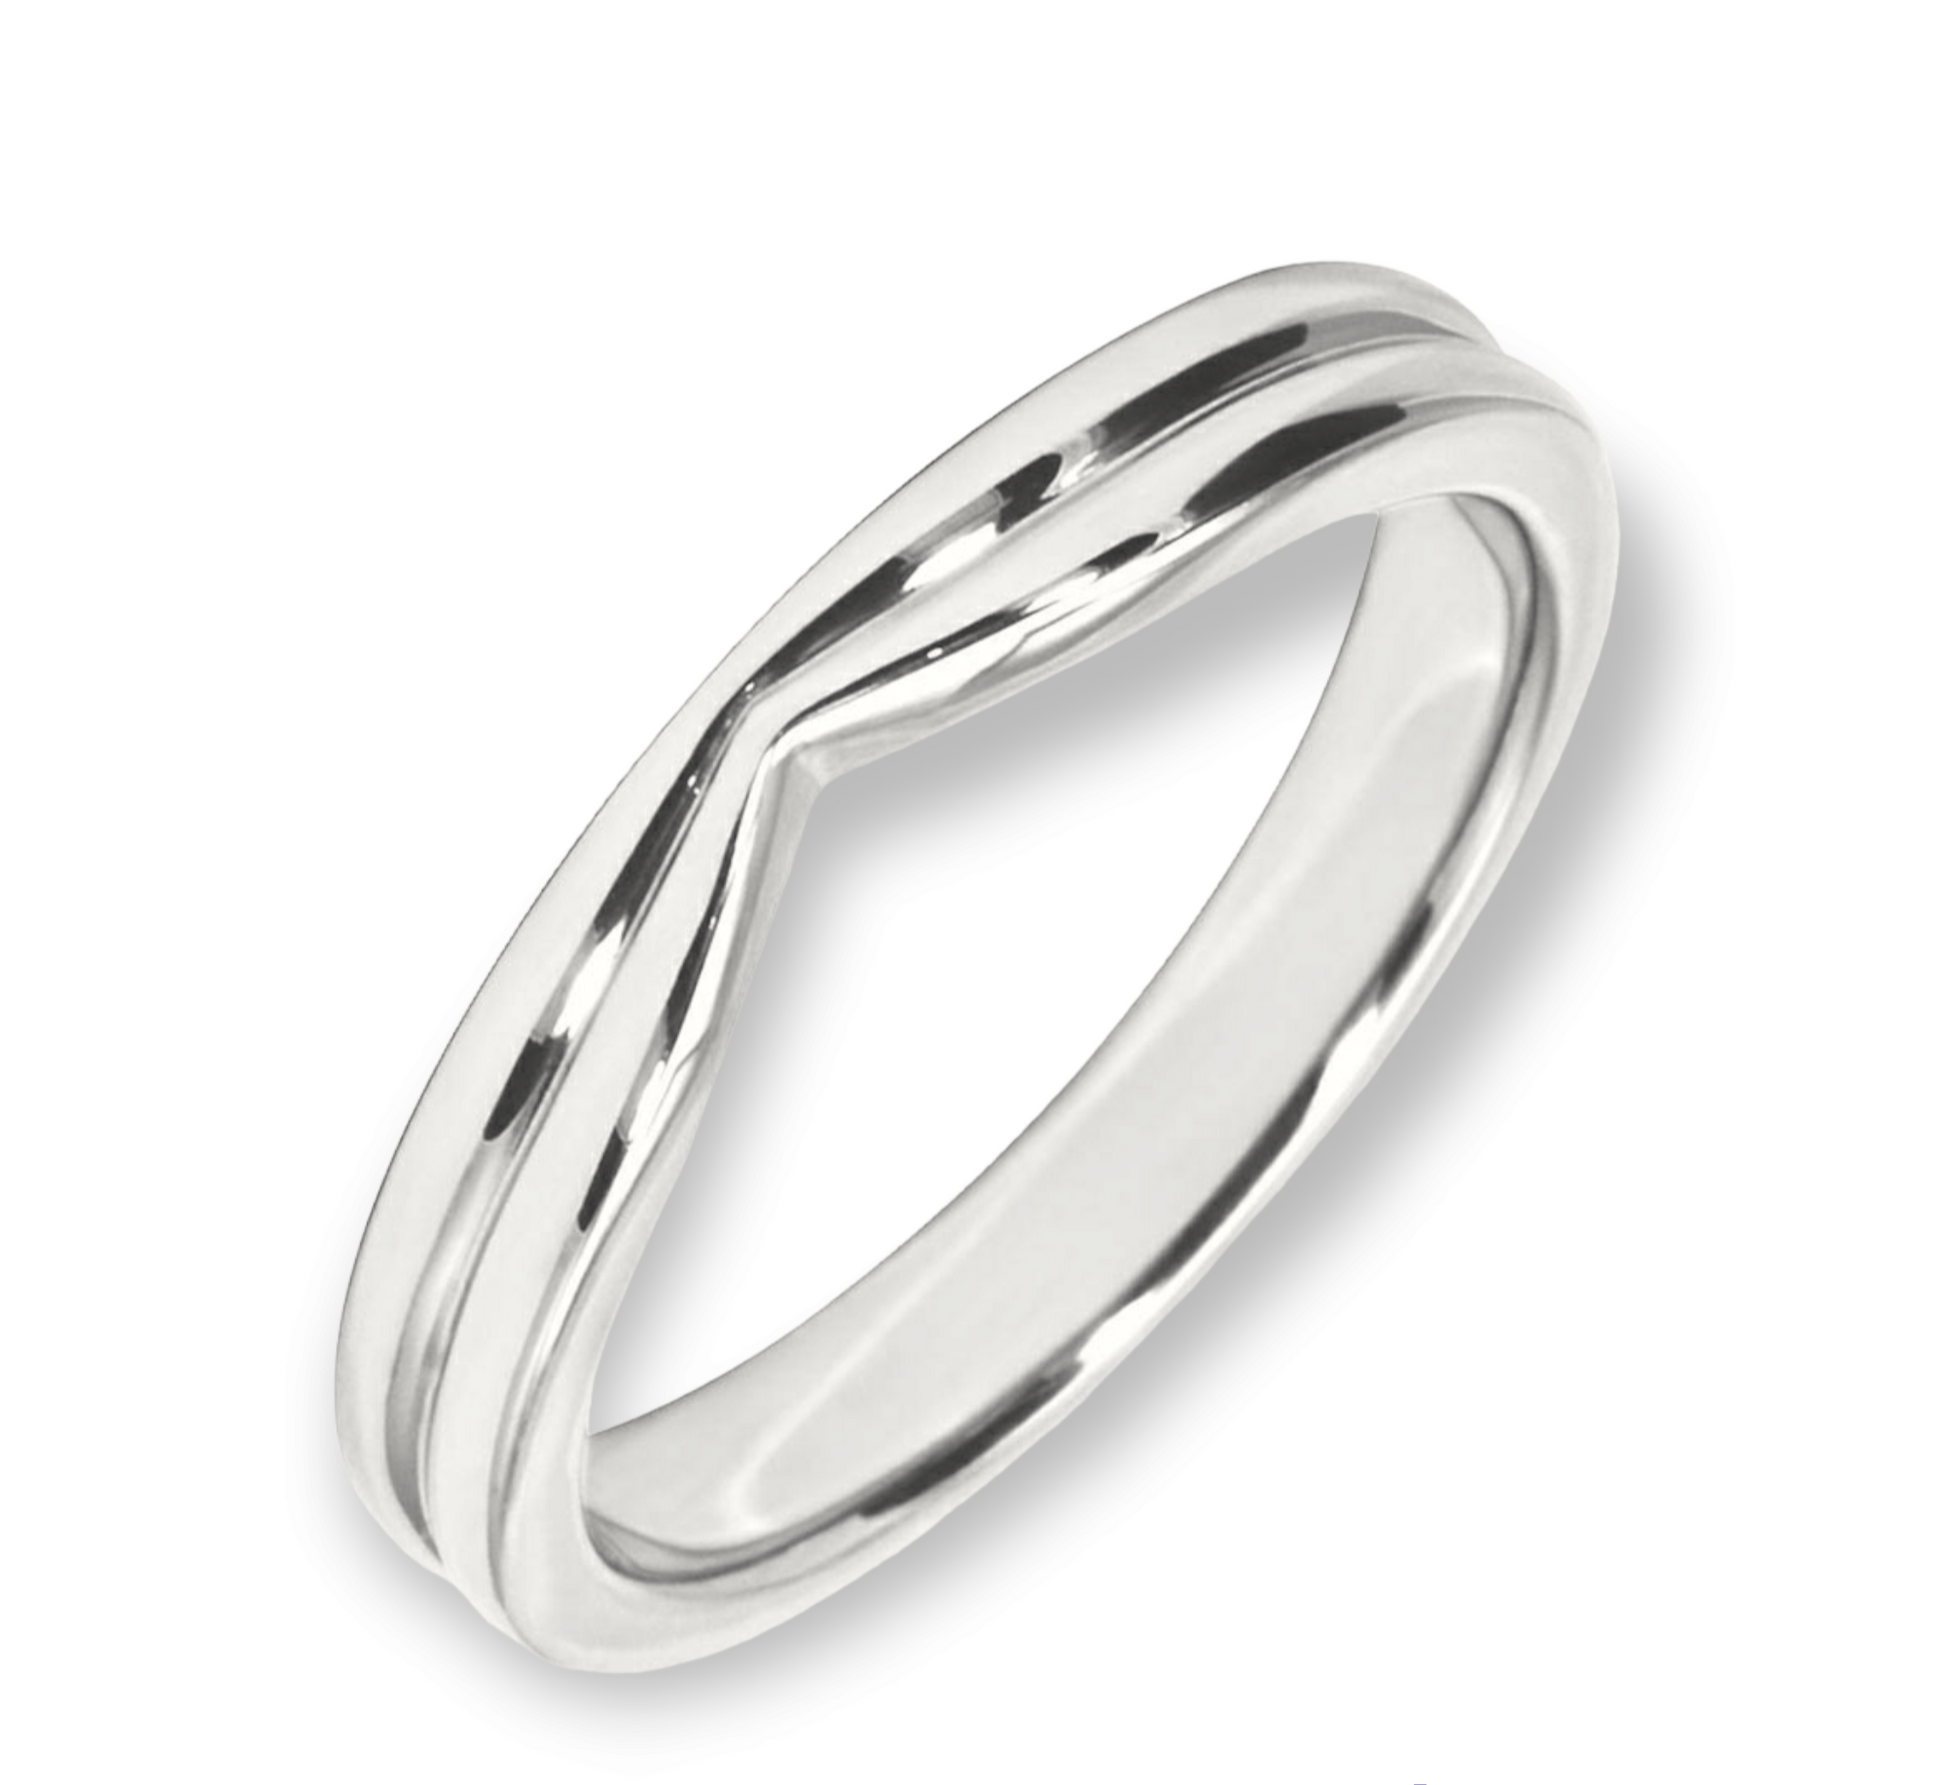 White gold v shape wedding ring